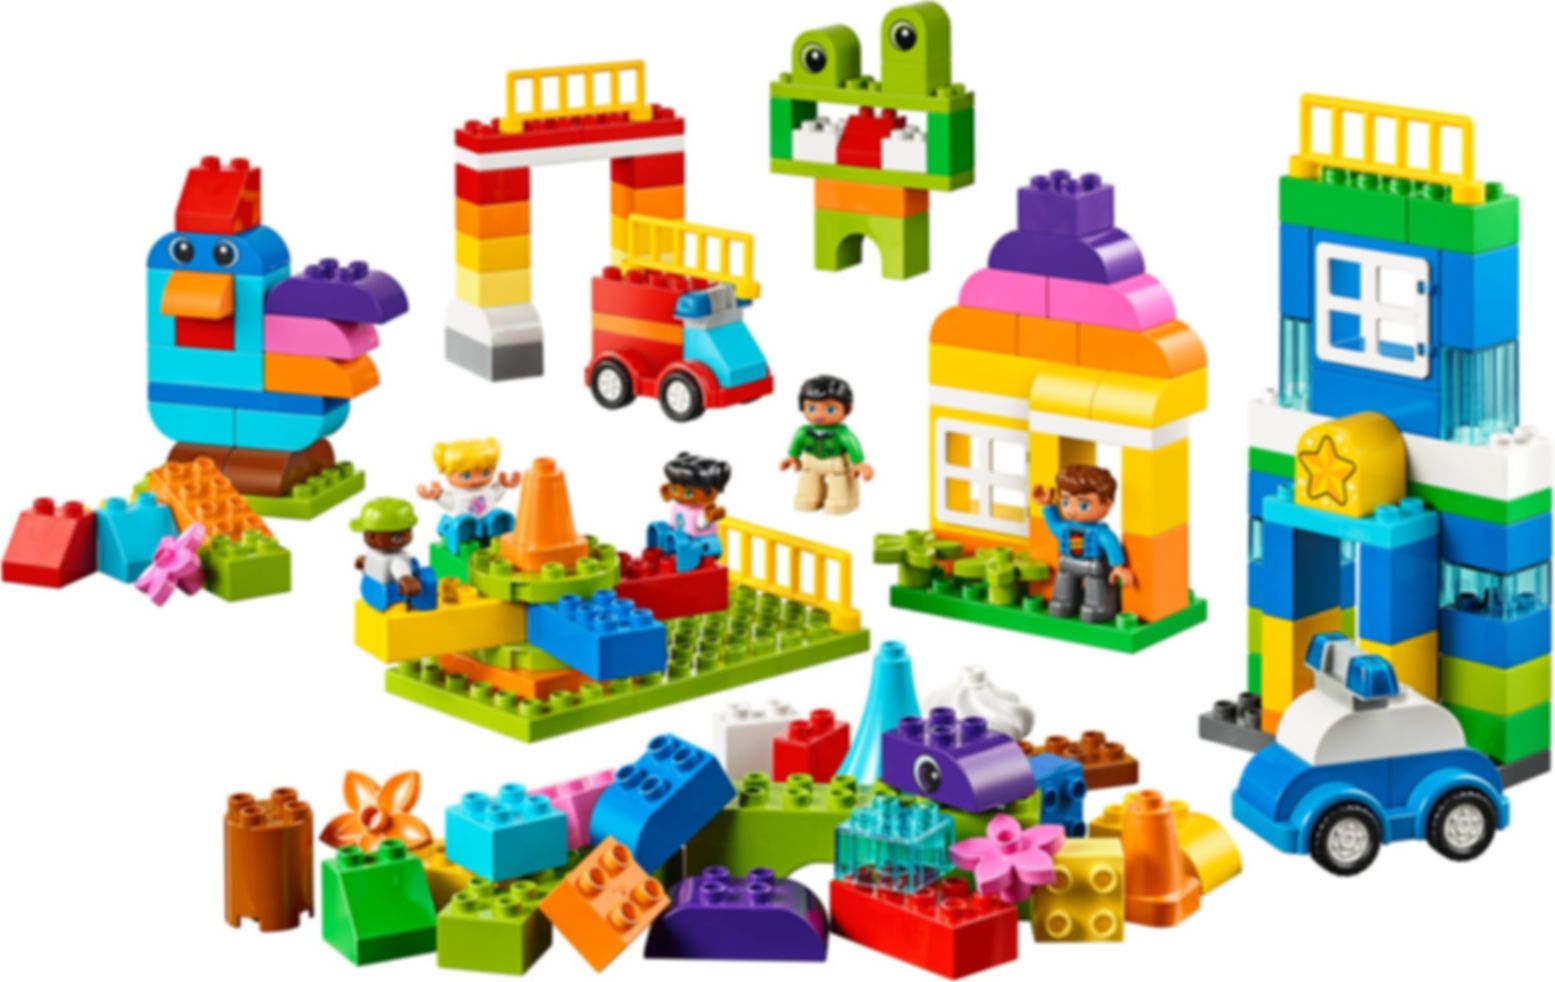 LEGO® Education My XL World components